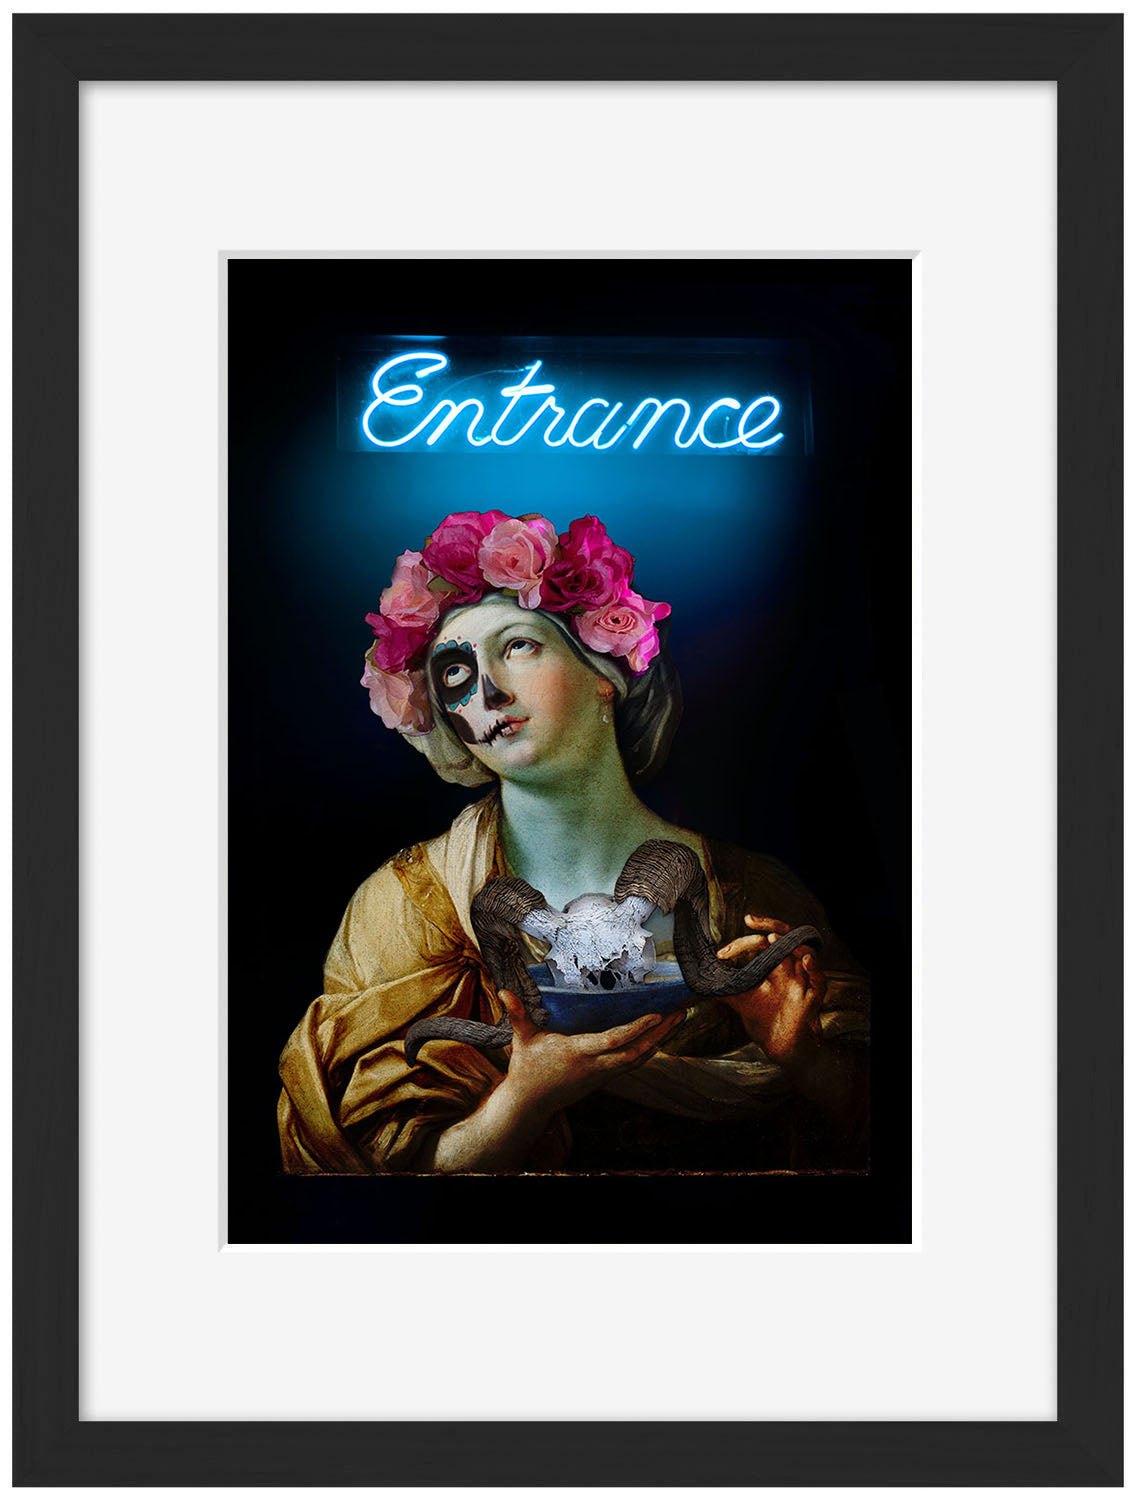 Entrance-delacroix, print-Framed Print-30 x 40 cm-BLUE SHAKER